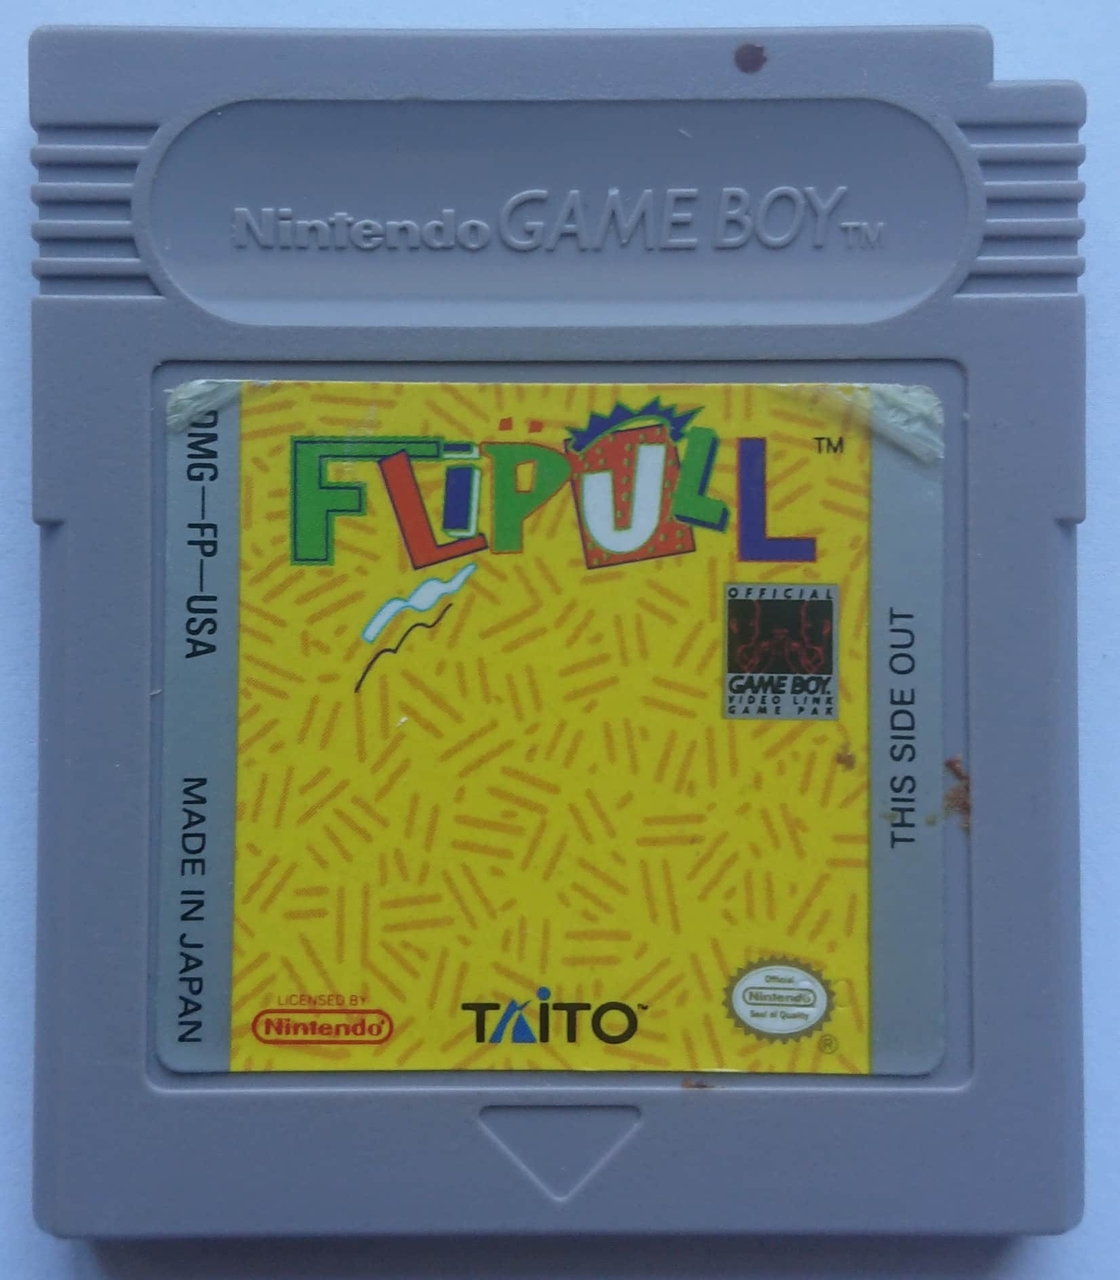 Flipull - Gameboy Classic Games